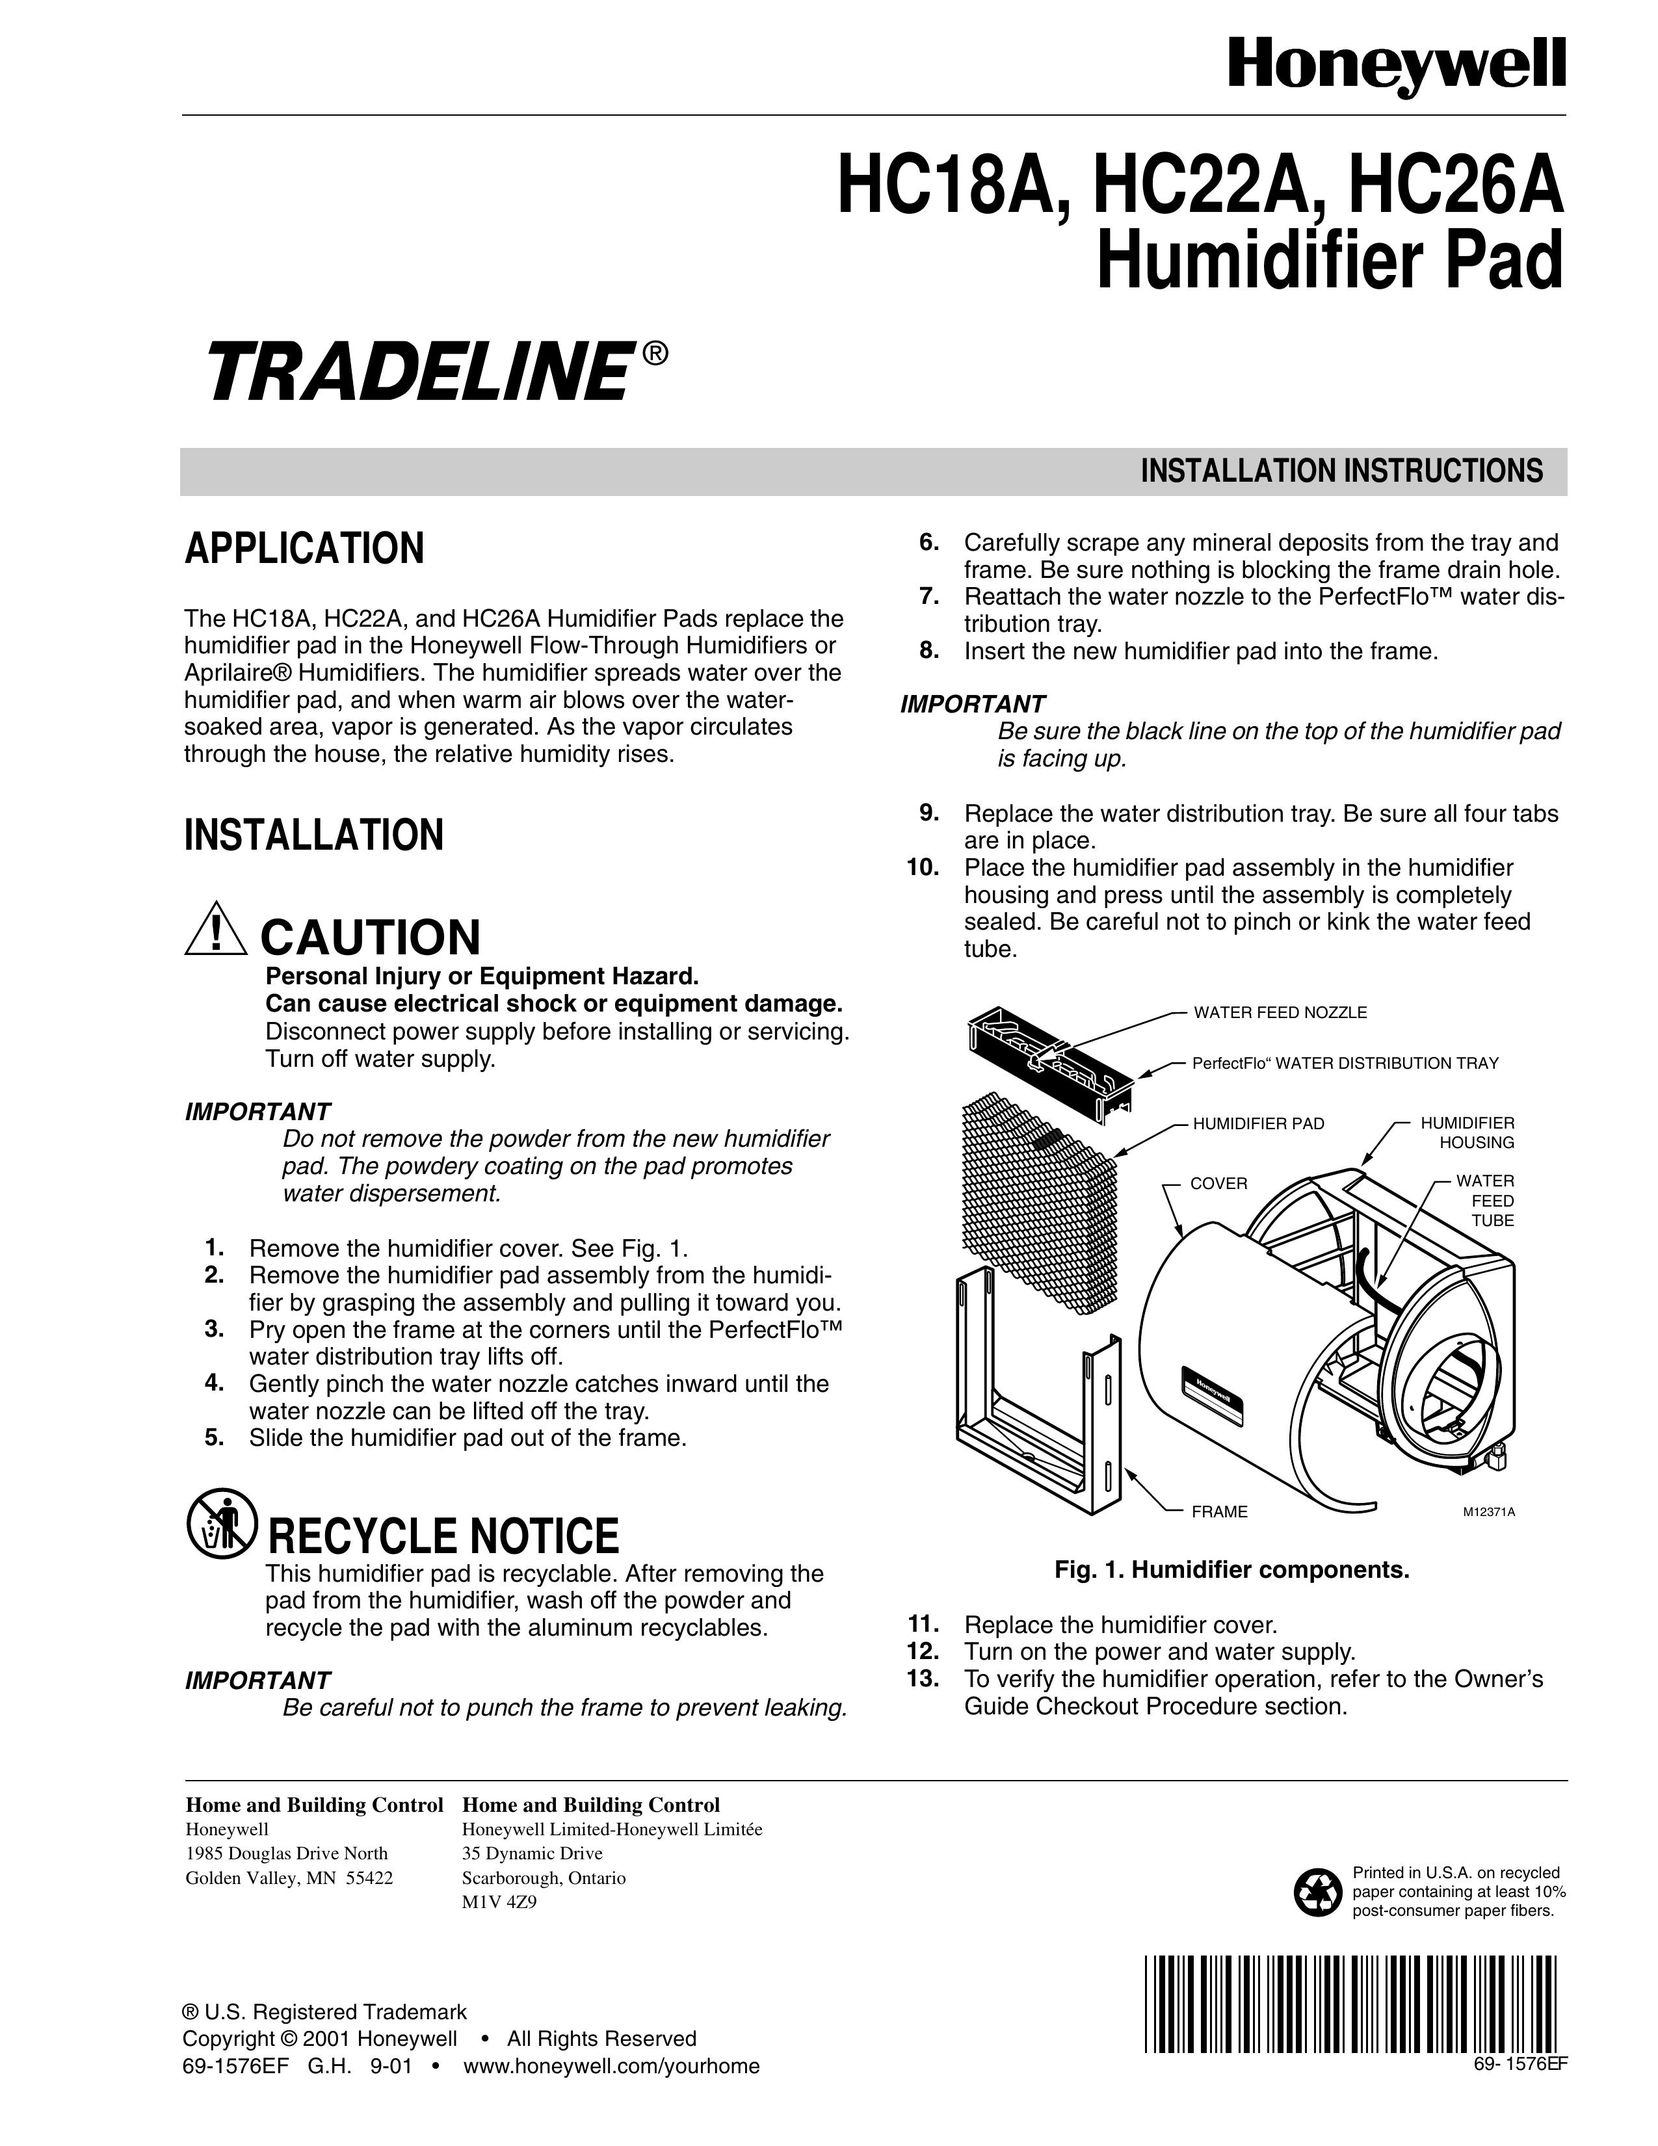 Honeywell HC18A Humidifier User Manual